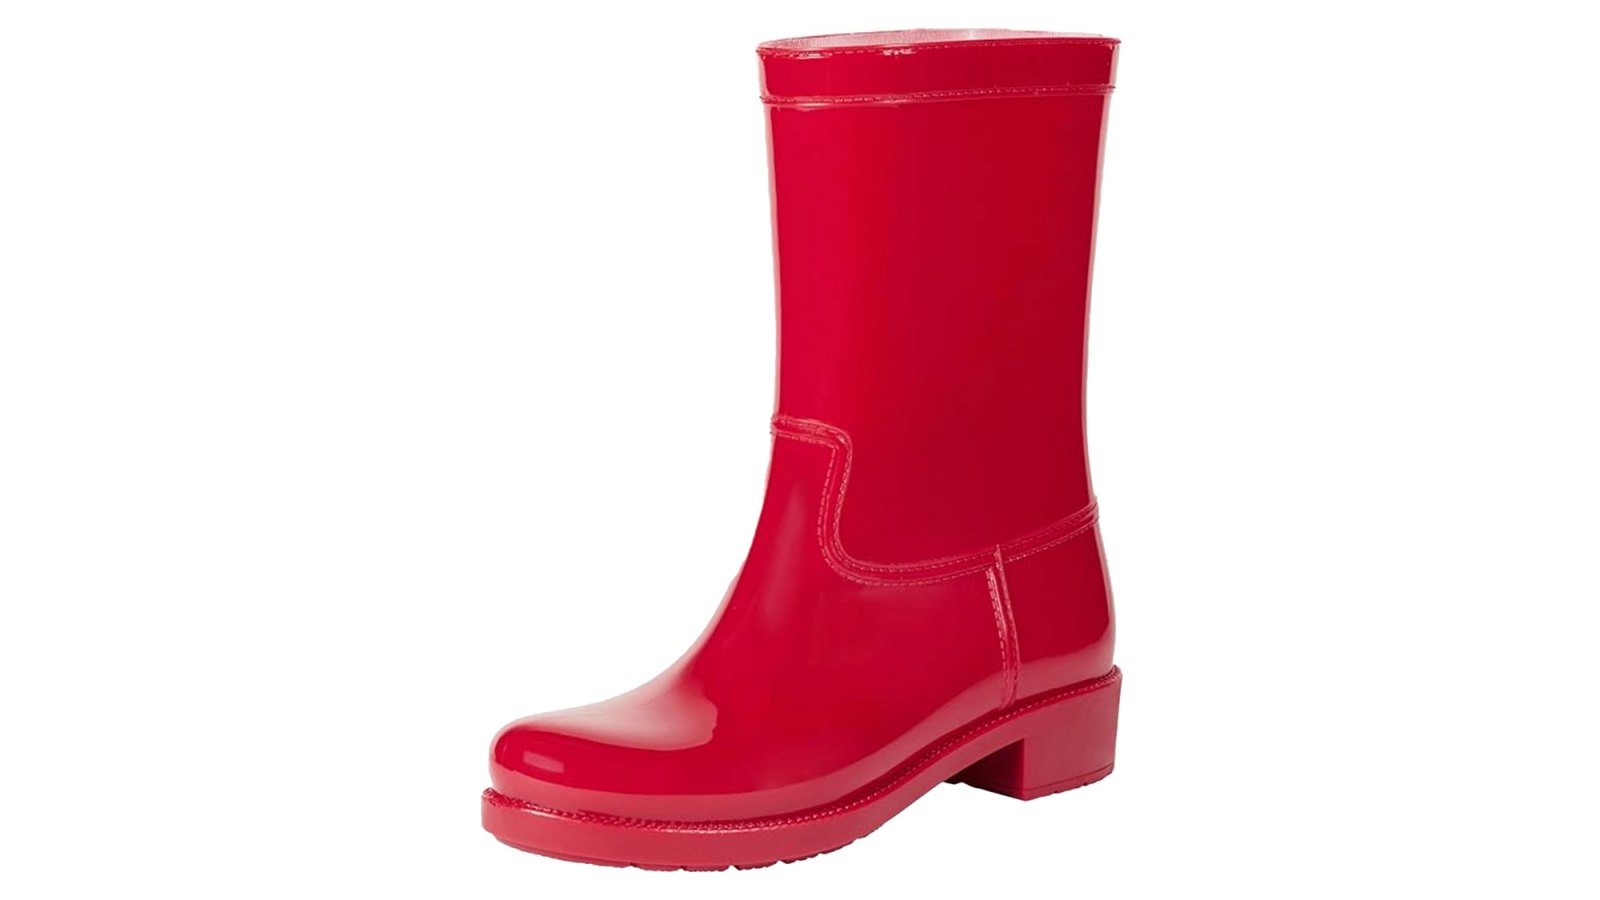 The Drop Rain boot